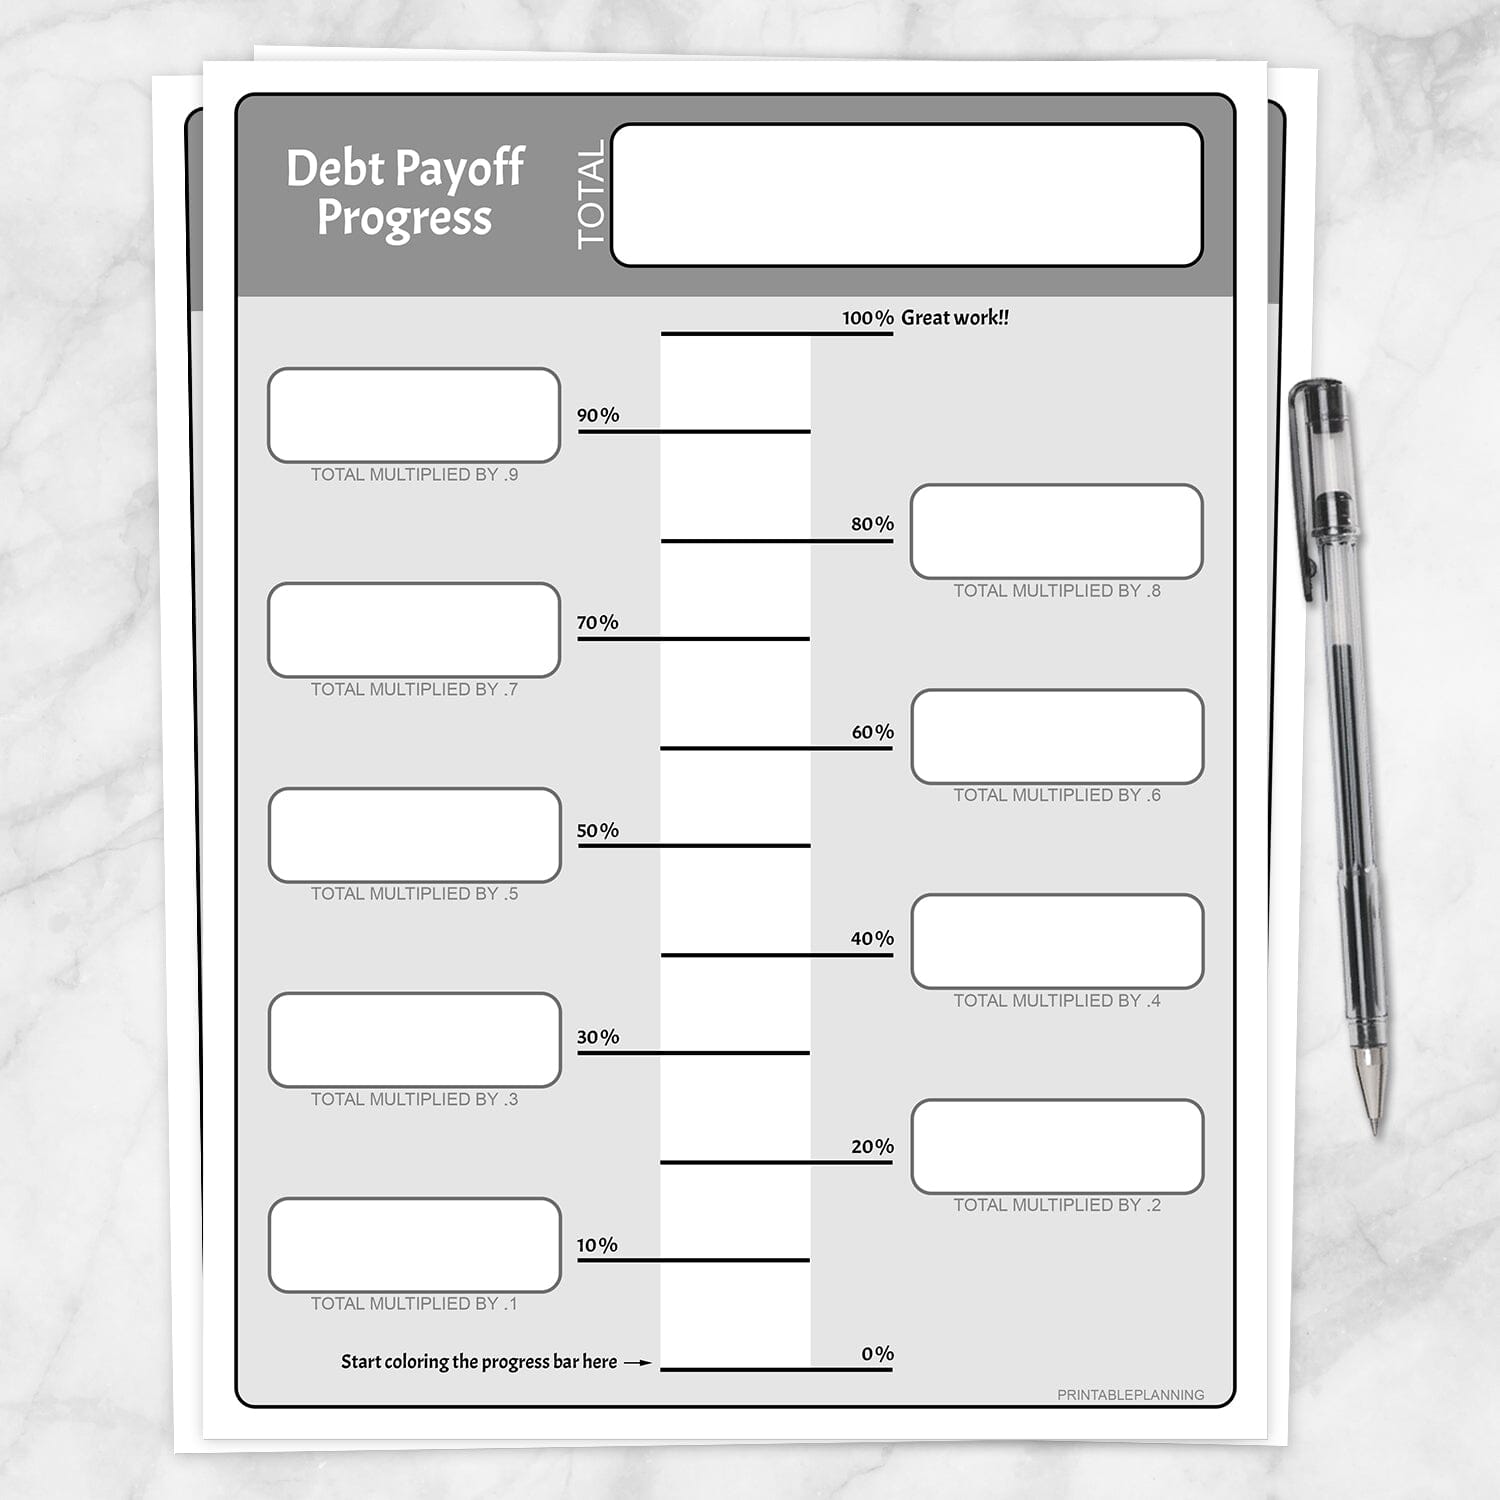 Printable Debt Payoff Progress Bar (ascending) at Printable Planning.